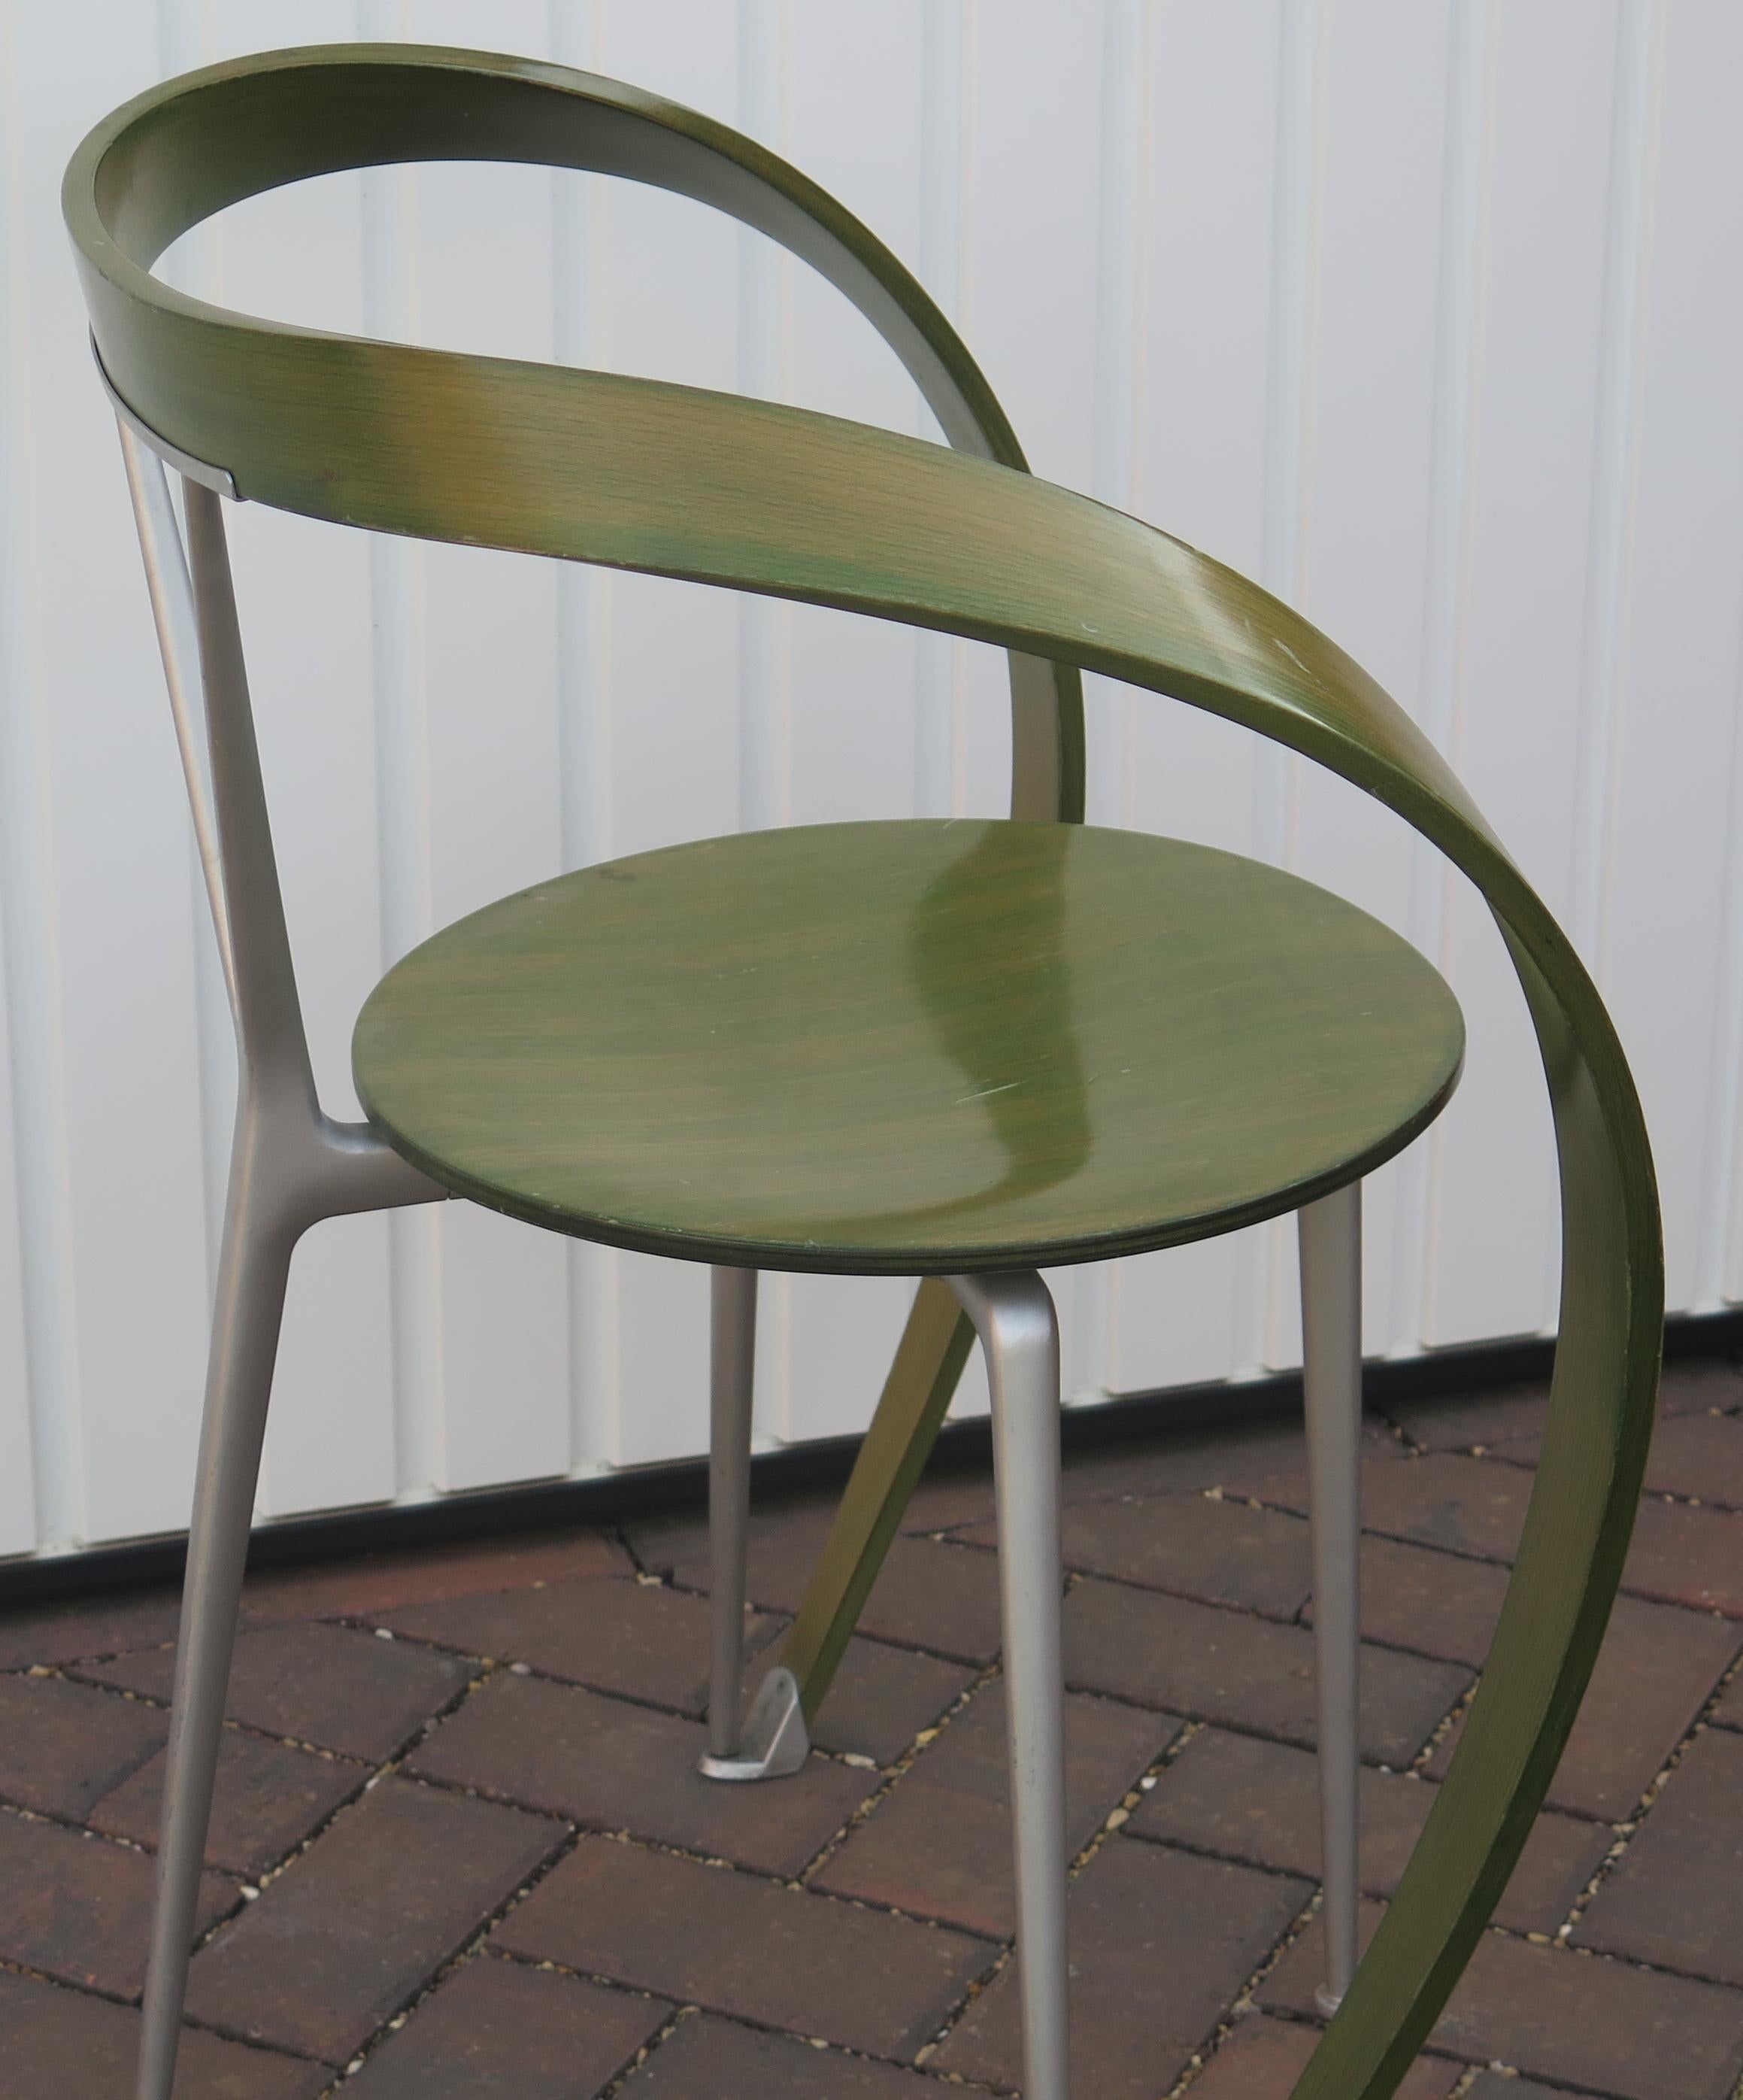 20th Century Revers Chair by Andrea Branzi for Cassina Italian Design, Ca 1993 For Sale